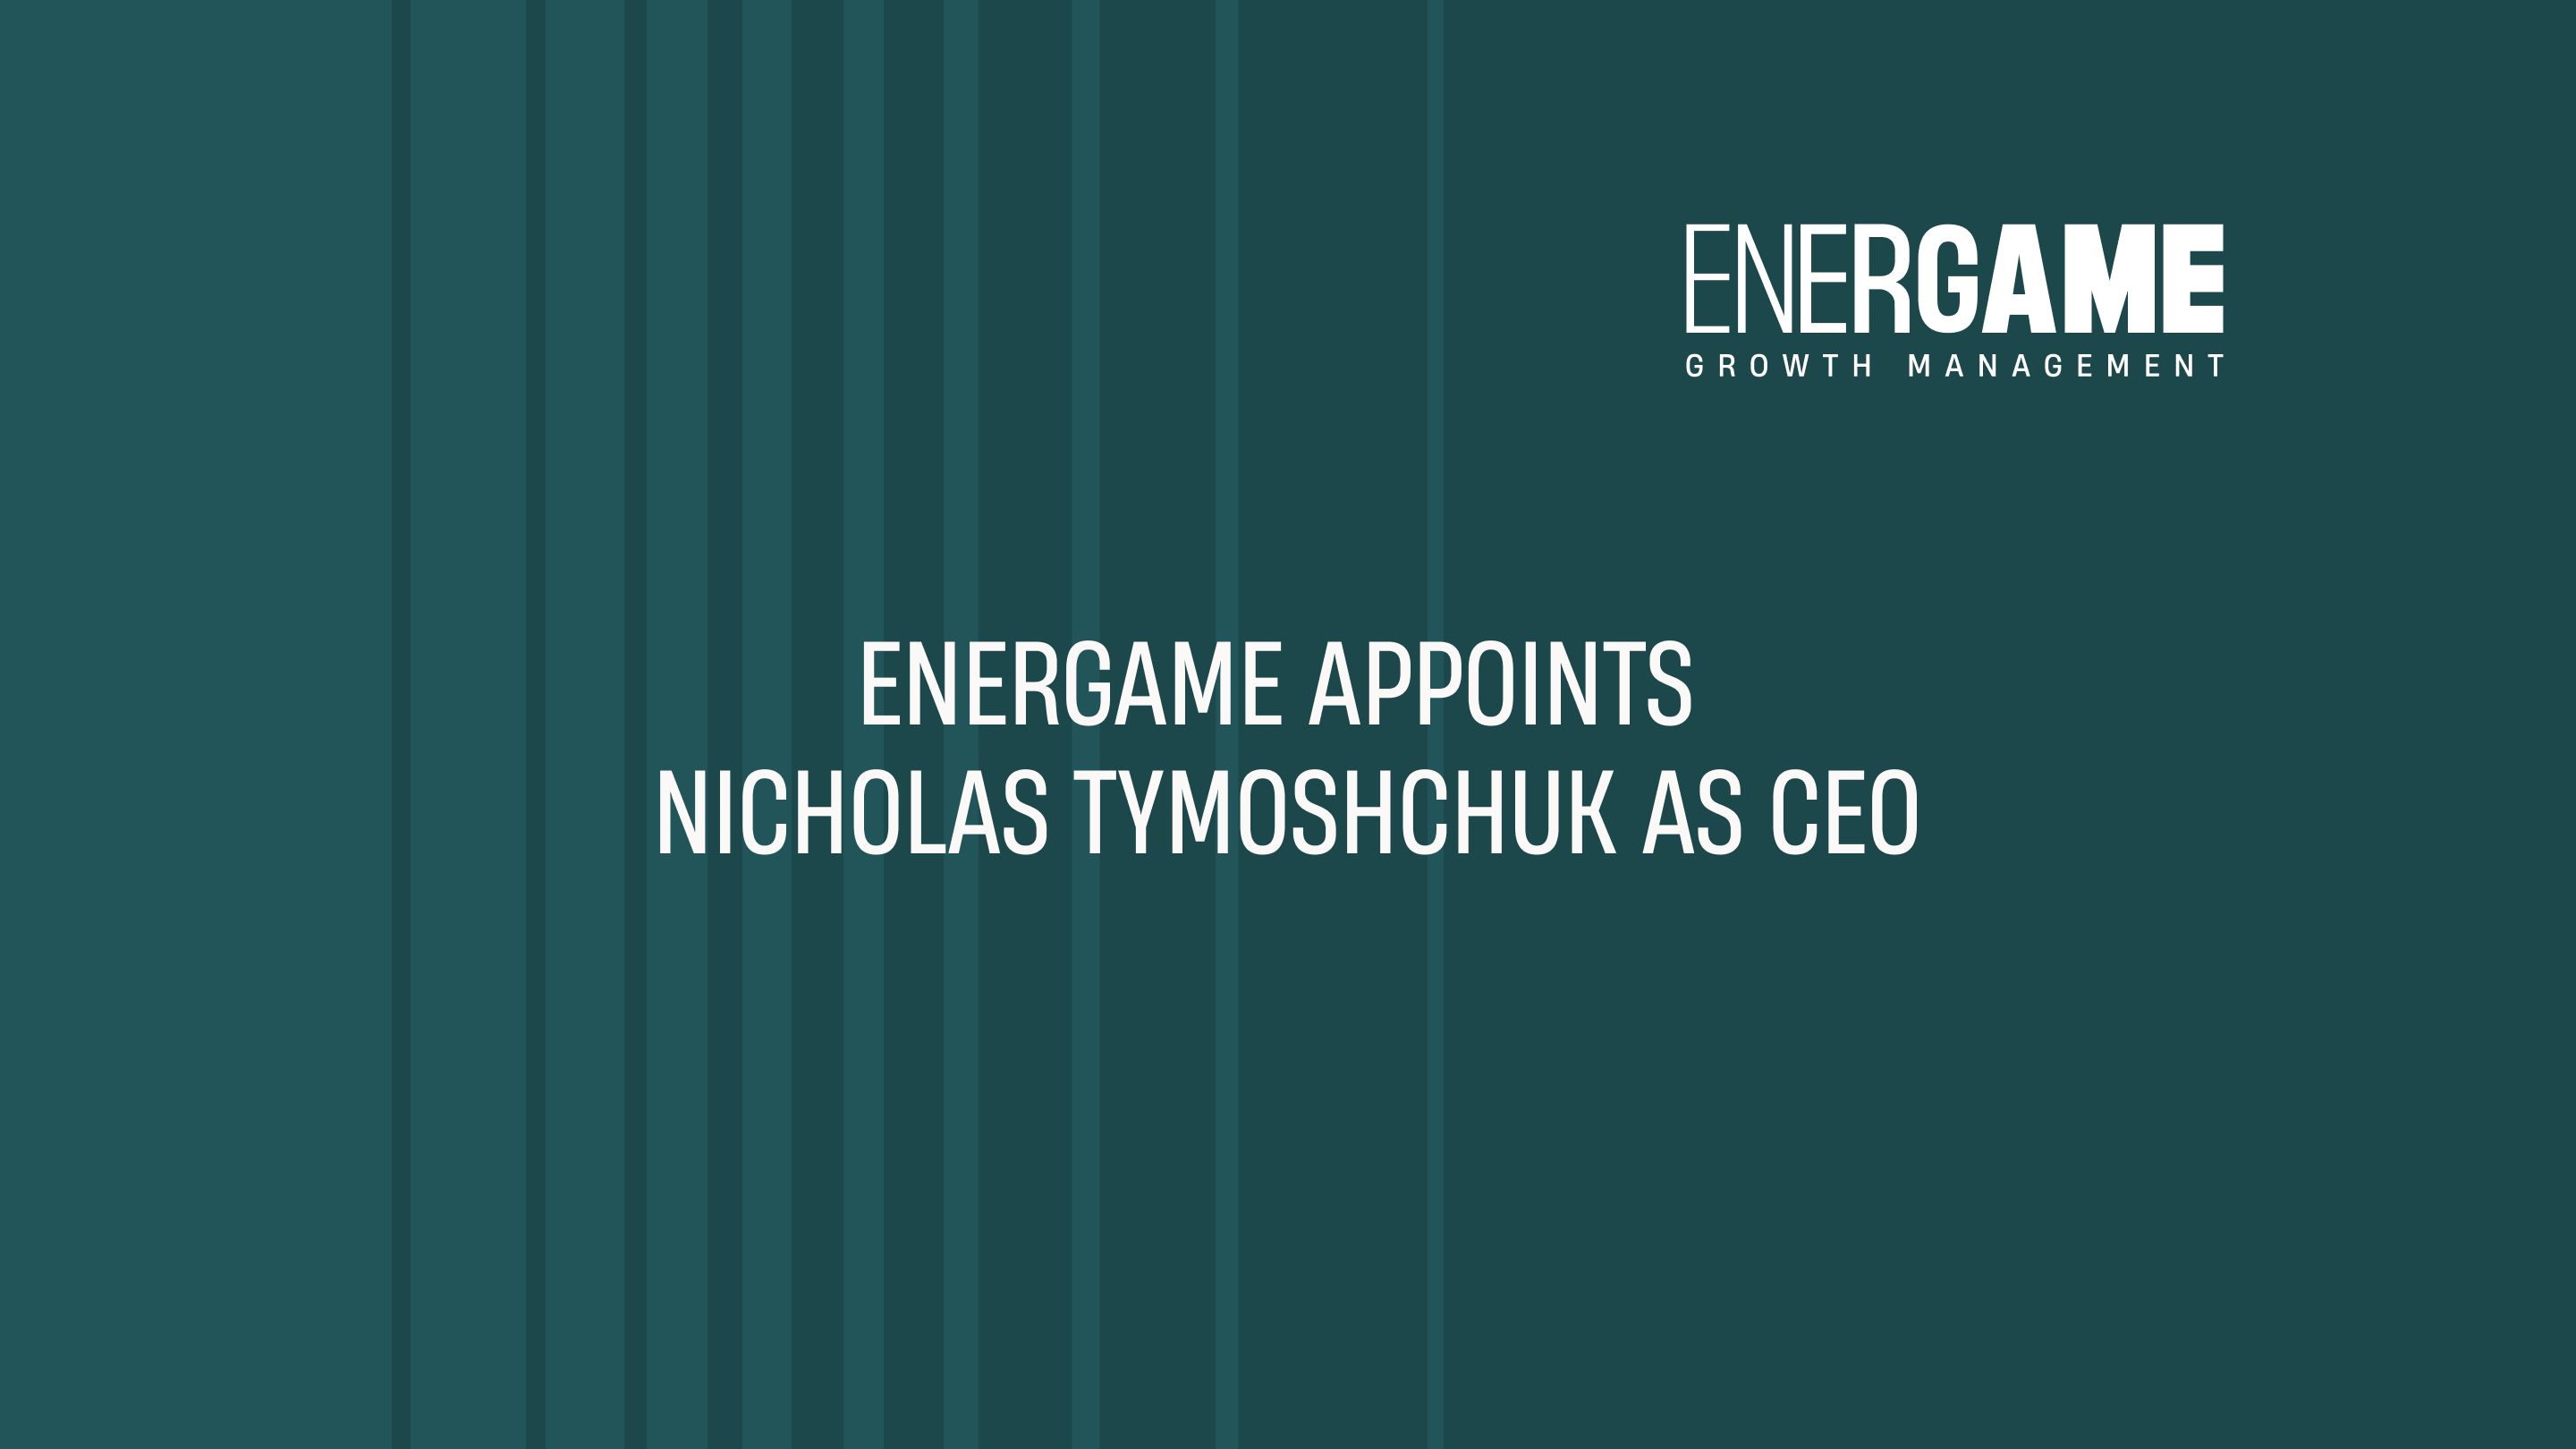 Energame appoints Nicholas Tymoshchuk as CEO